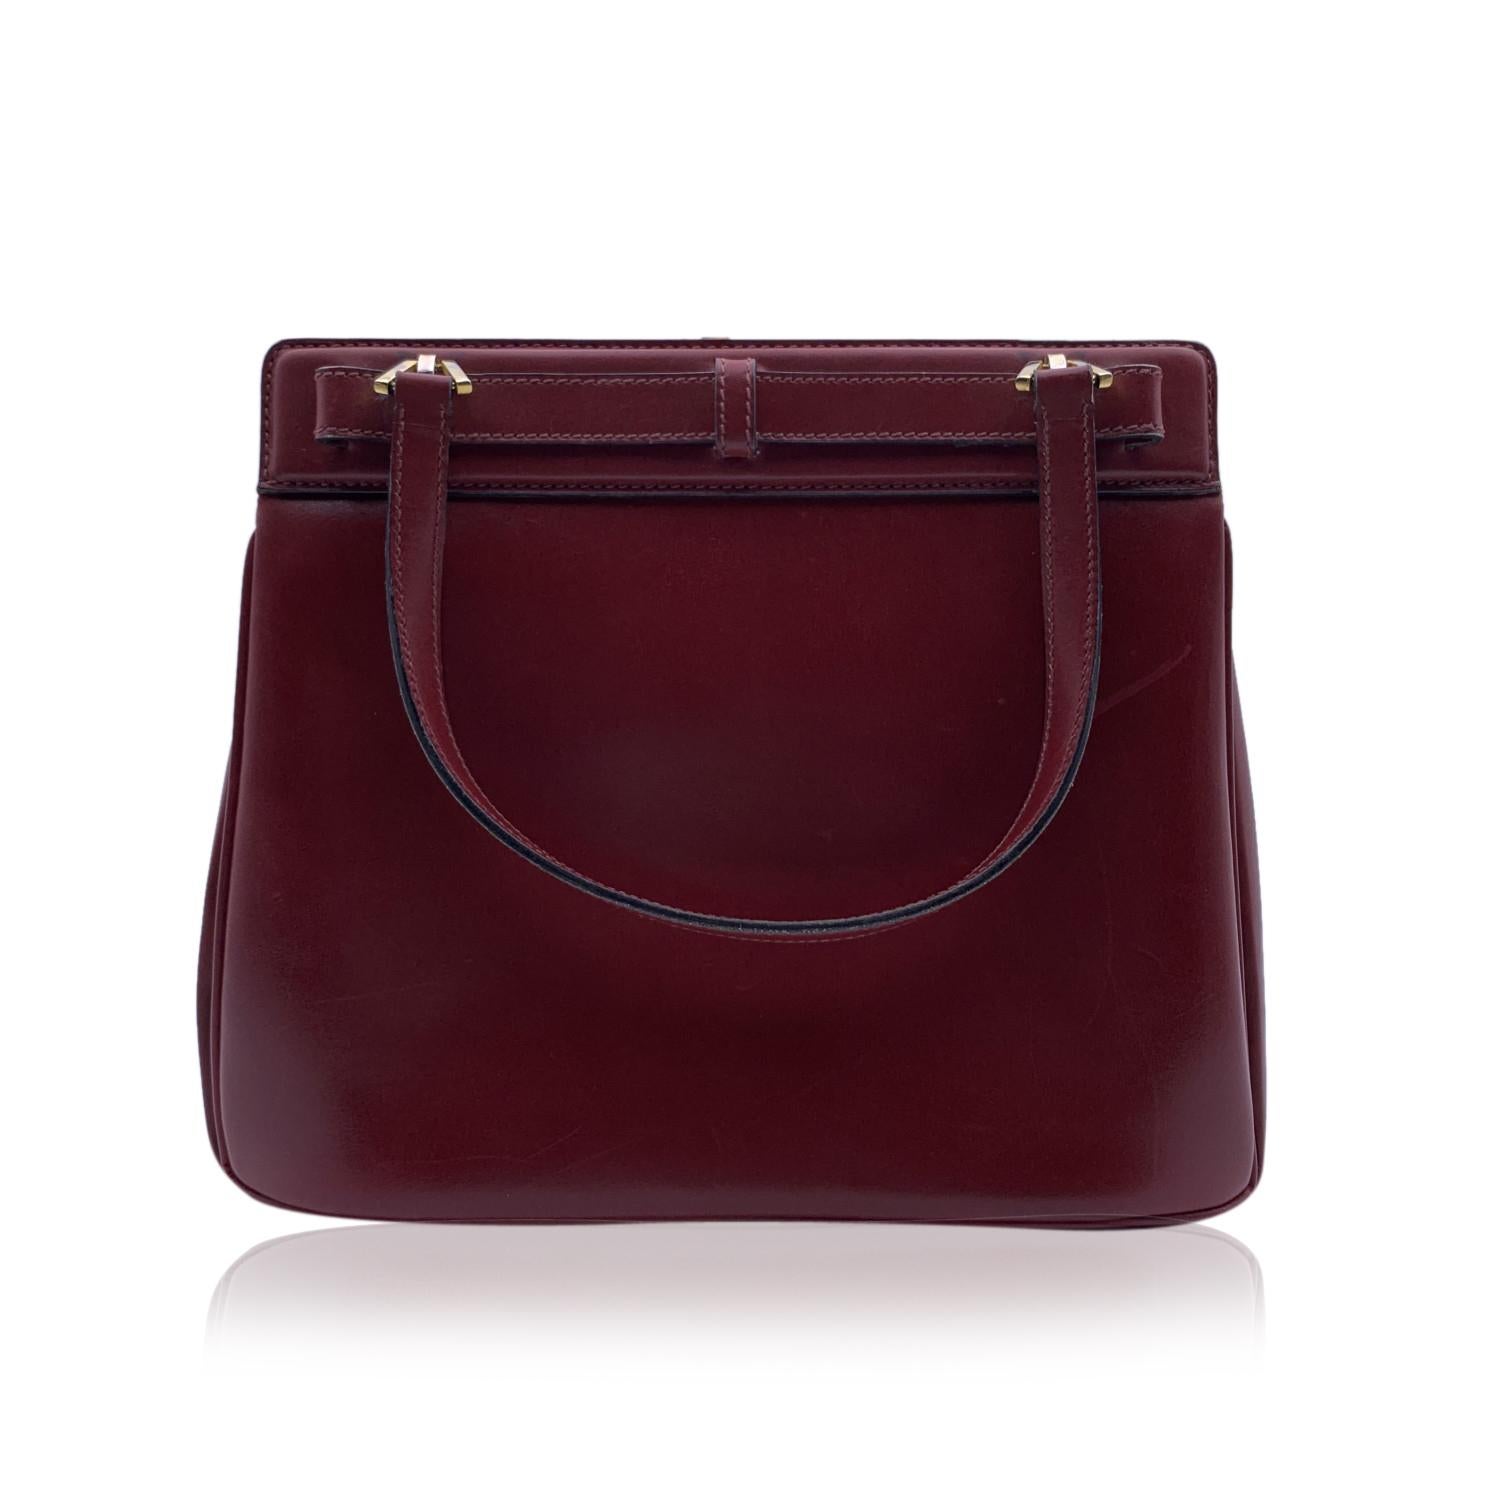 Women's Gucci Vintage Burgundy Leather Handbag Satchel Top Handles Bag